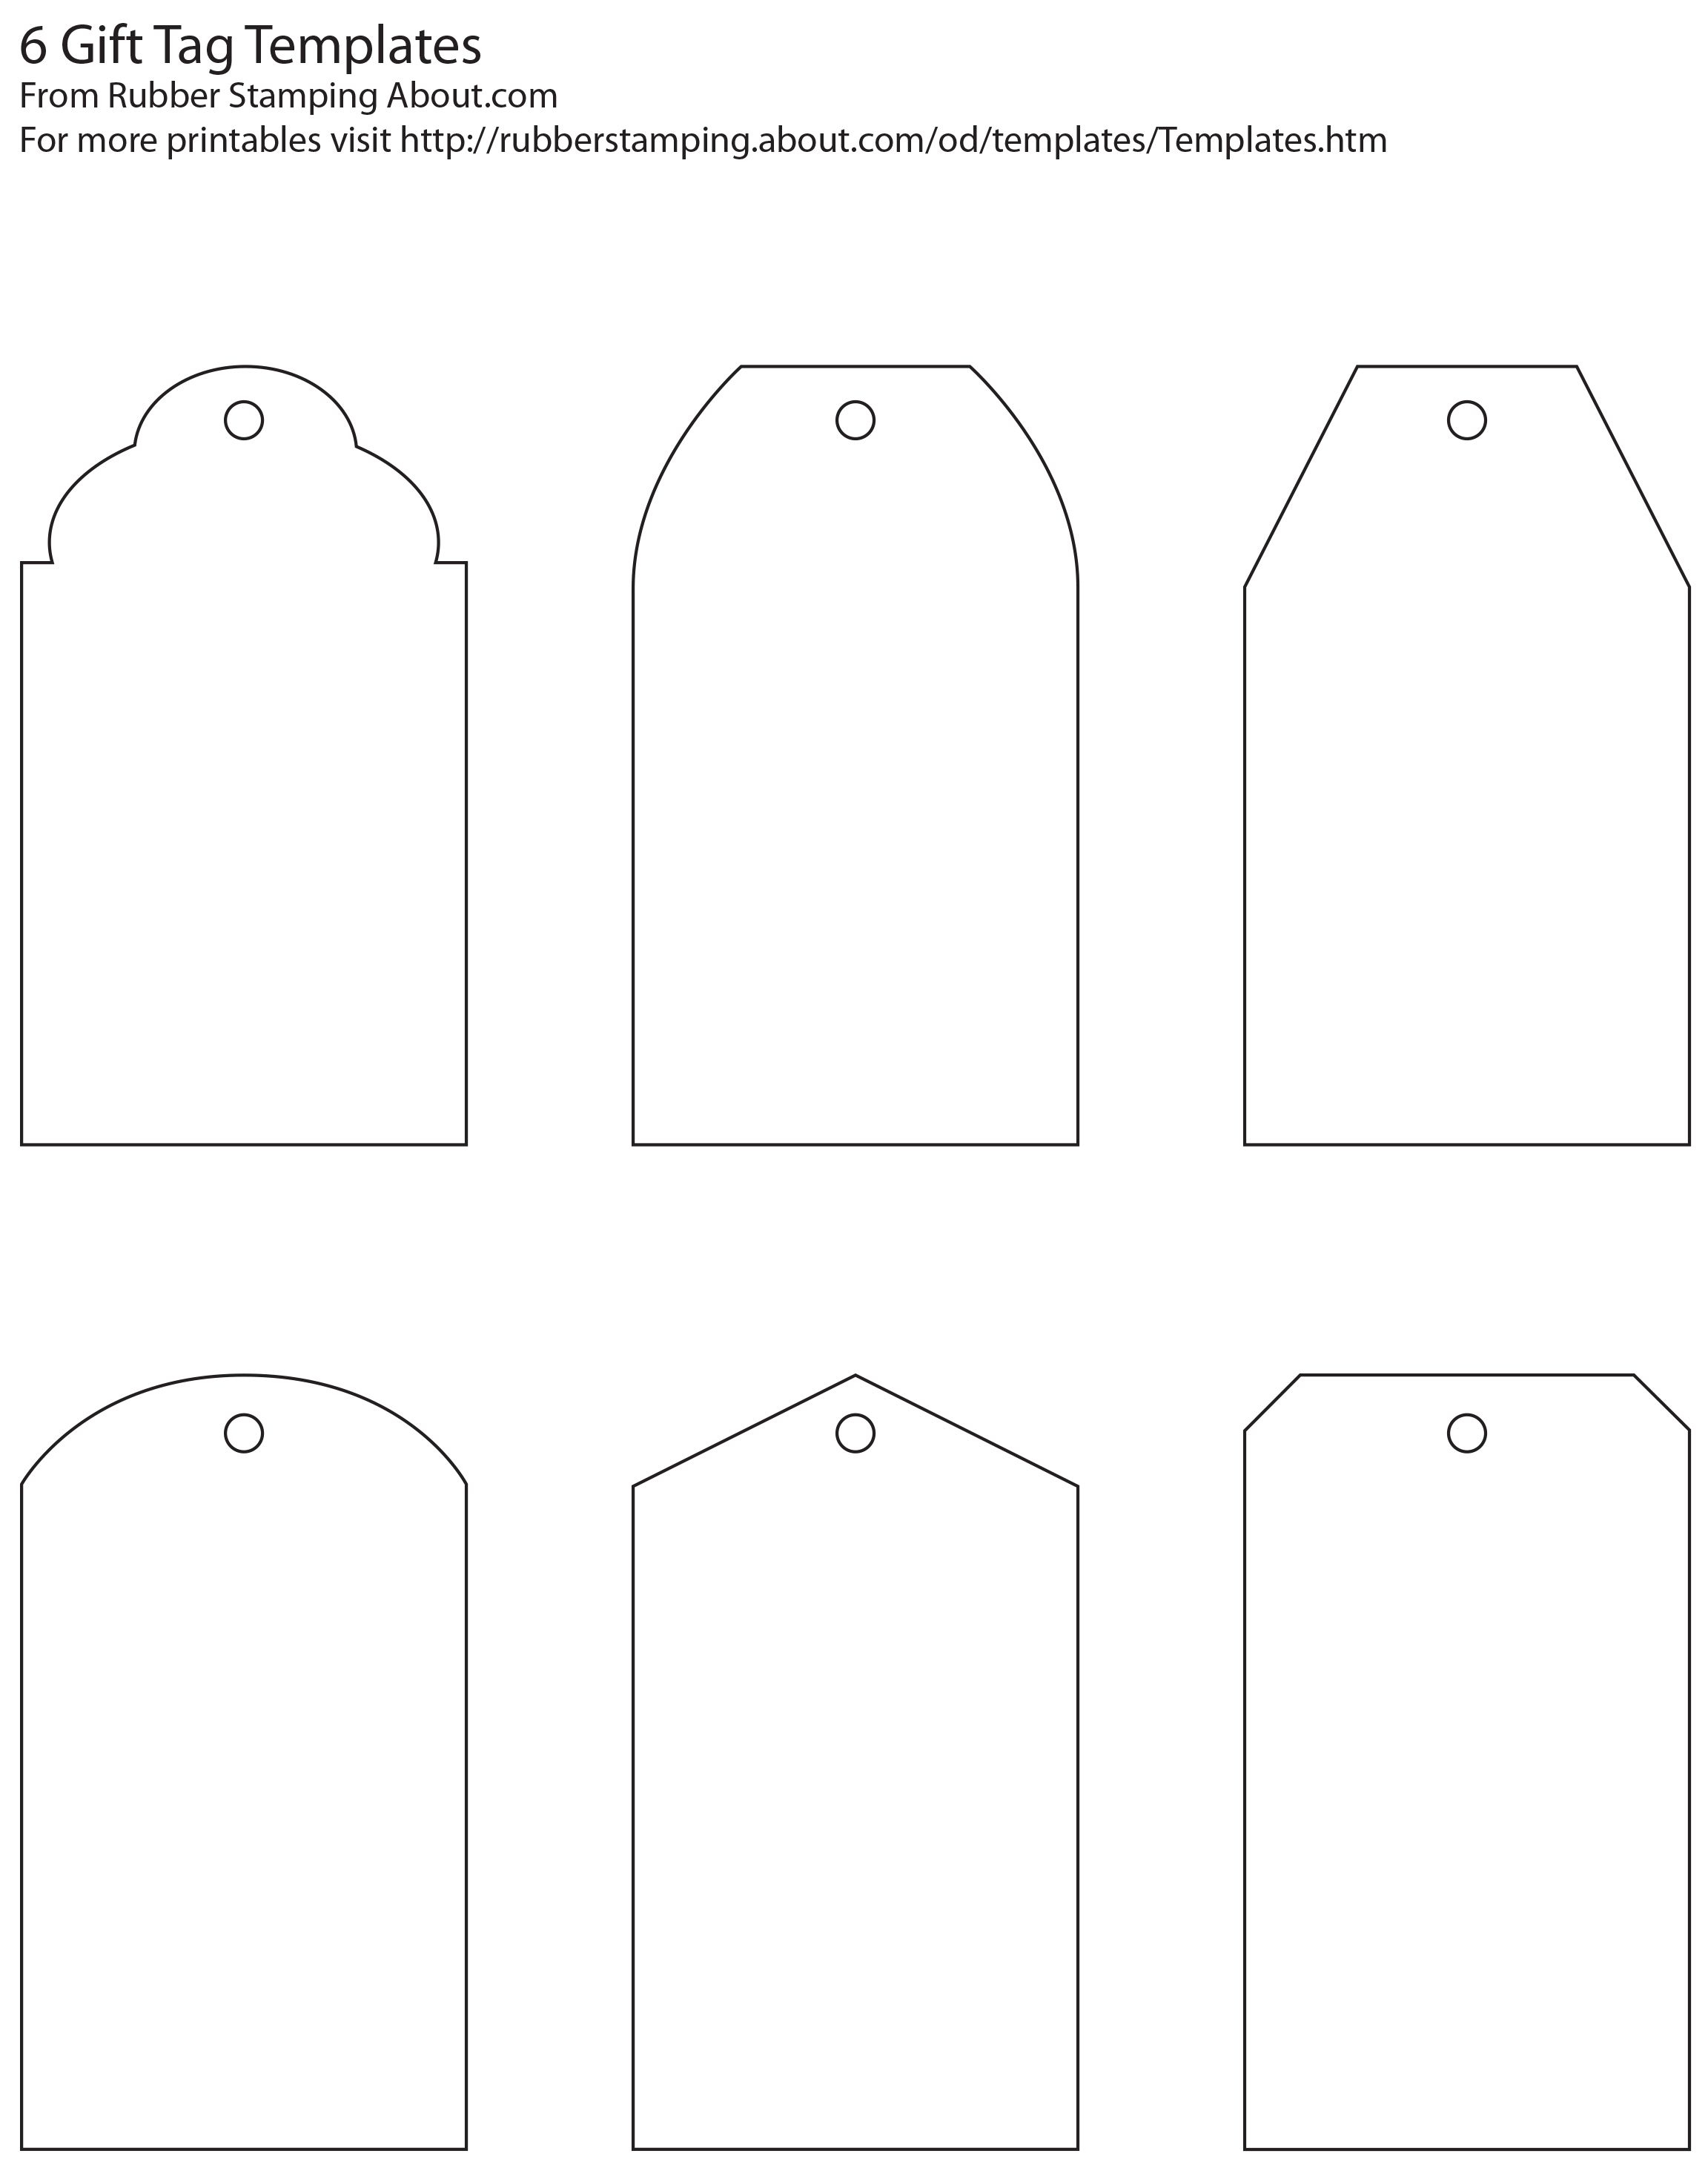 Free And Whimsical Printable Gift Tag Templates | Great Idea - Free Printable Goodie Bag Tags